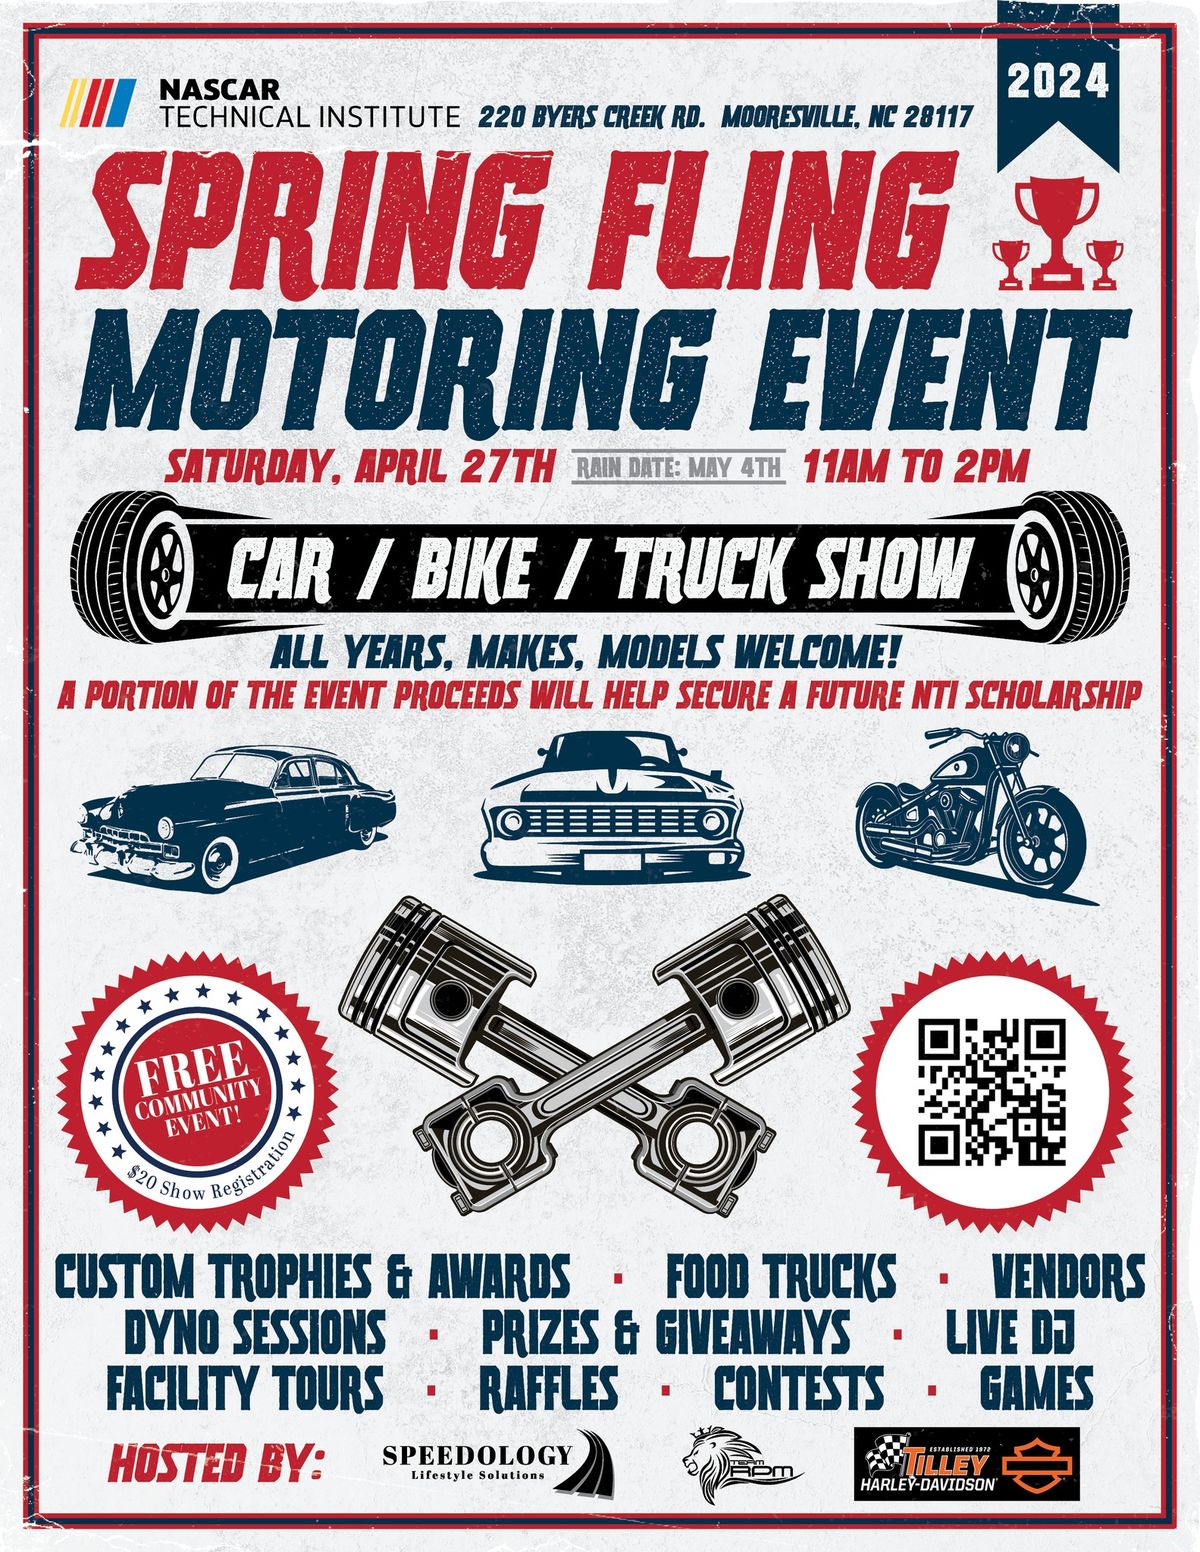 Spring Fling Motoring Event @ the NASCAR Technical Institute 